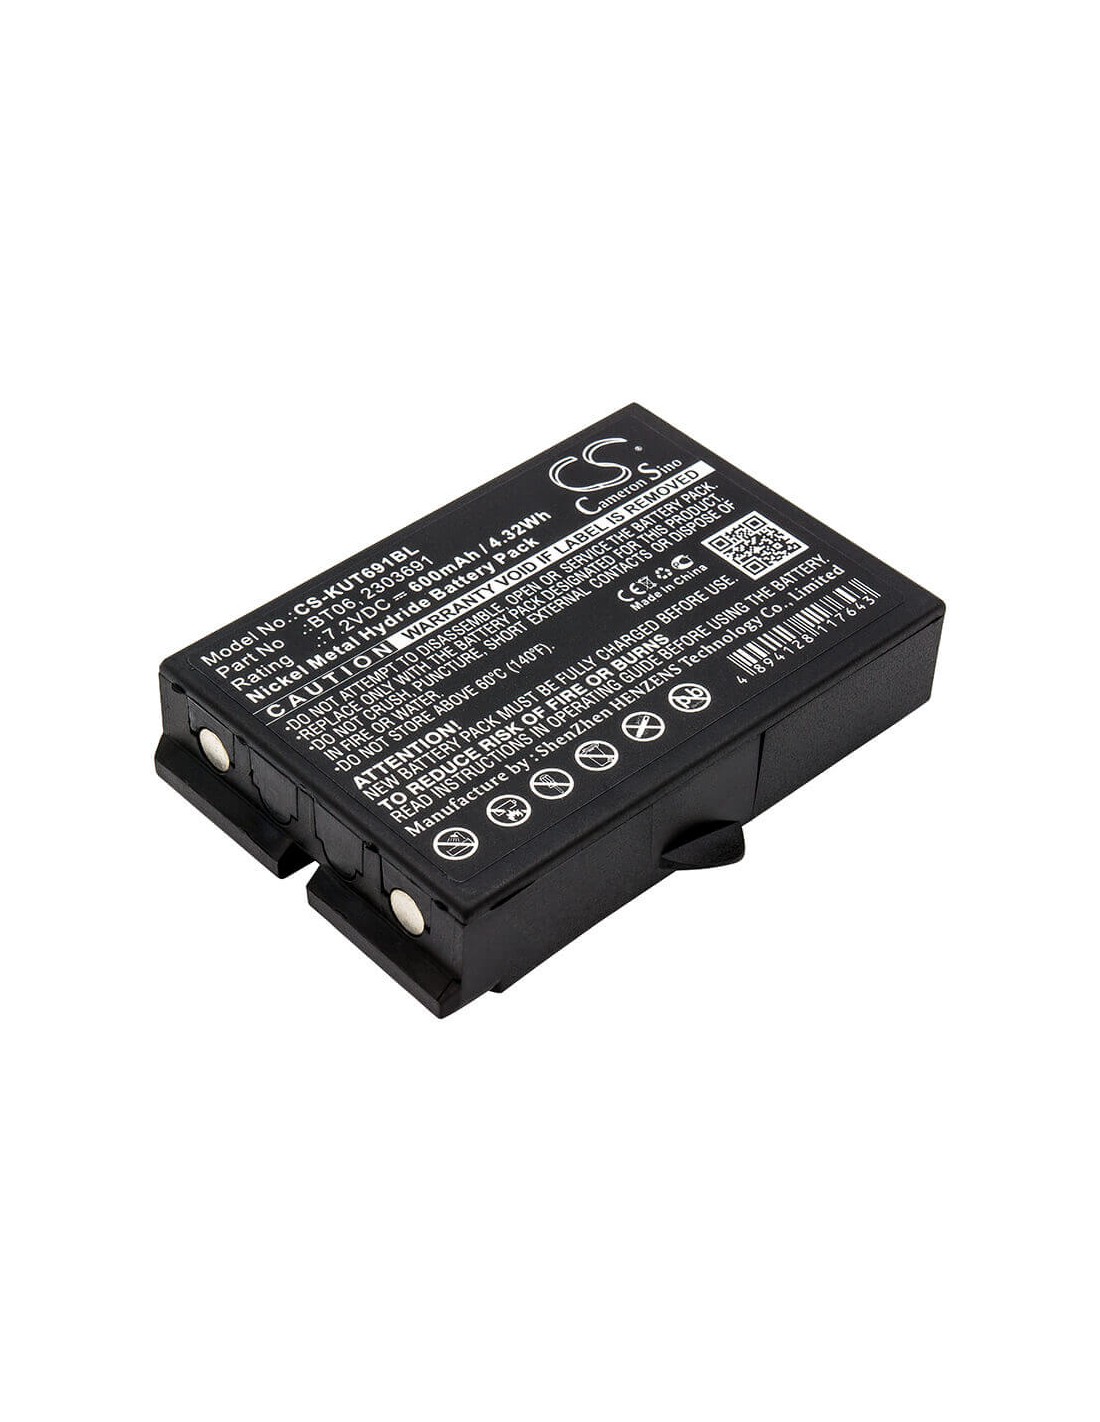 Battery for Ikusi, 2303691, Tm60, Tm61, Tm62, Tm62 Transmitters 7.2V, 600mAh - 4.32Wh